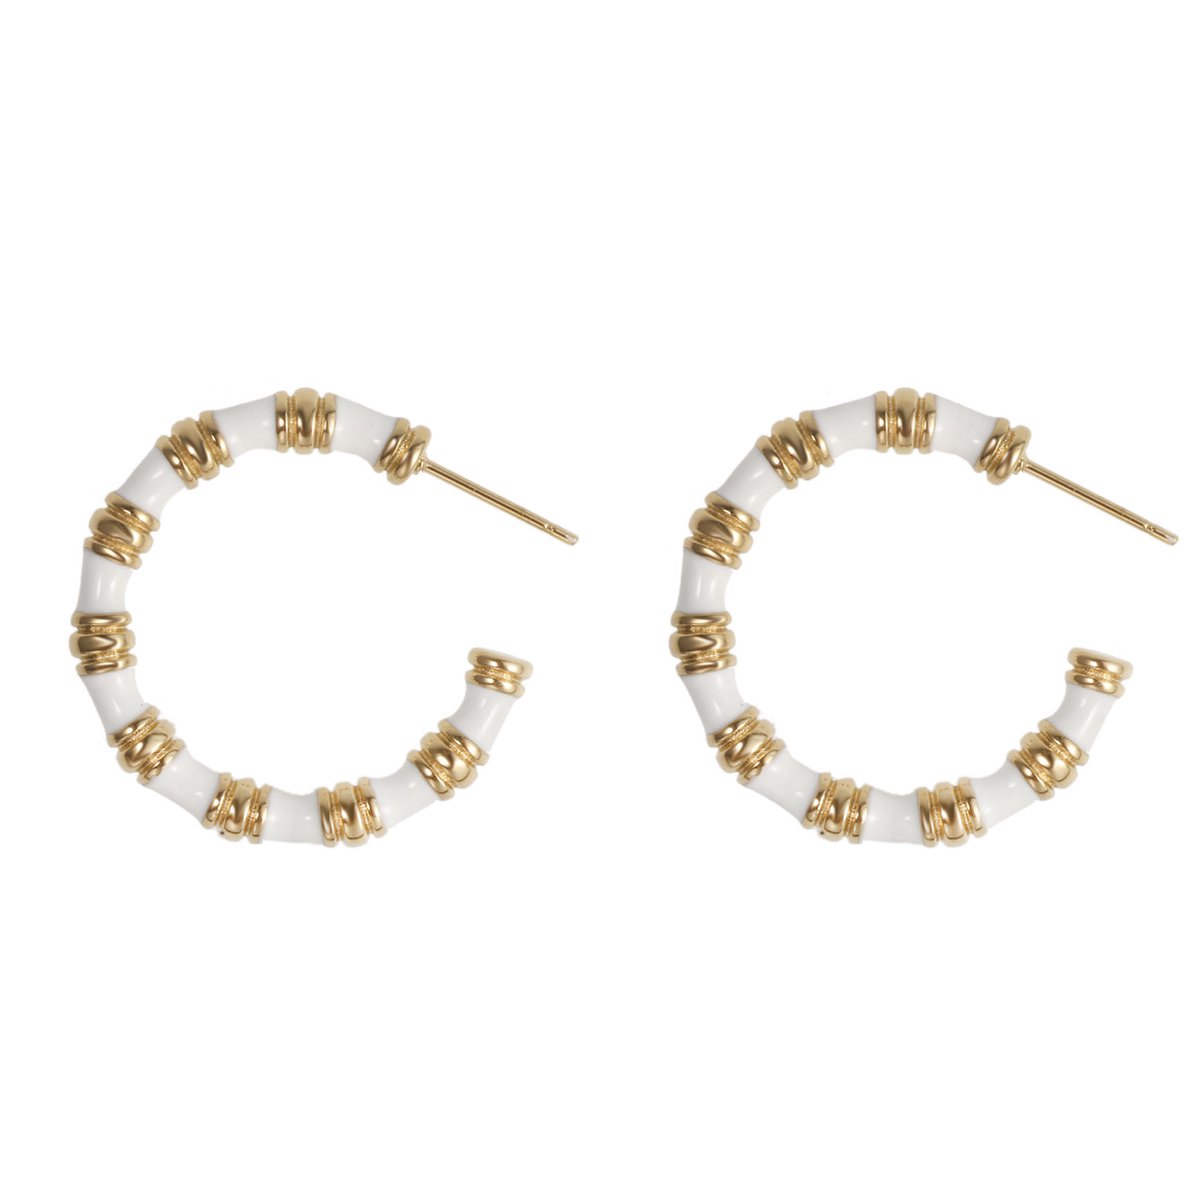 The Jewellery Club - Emily earrings beige - Oorbellen - Dames oorbellen - Stainless steel - Goud - Zwart - 3 cm